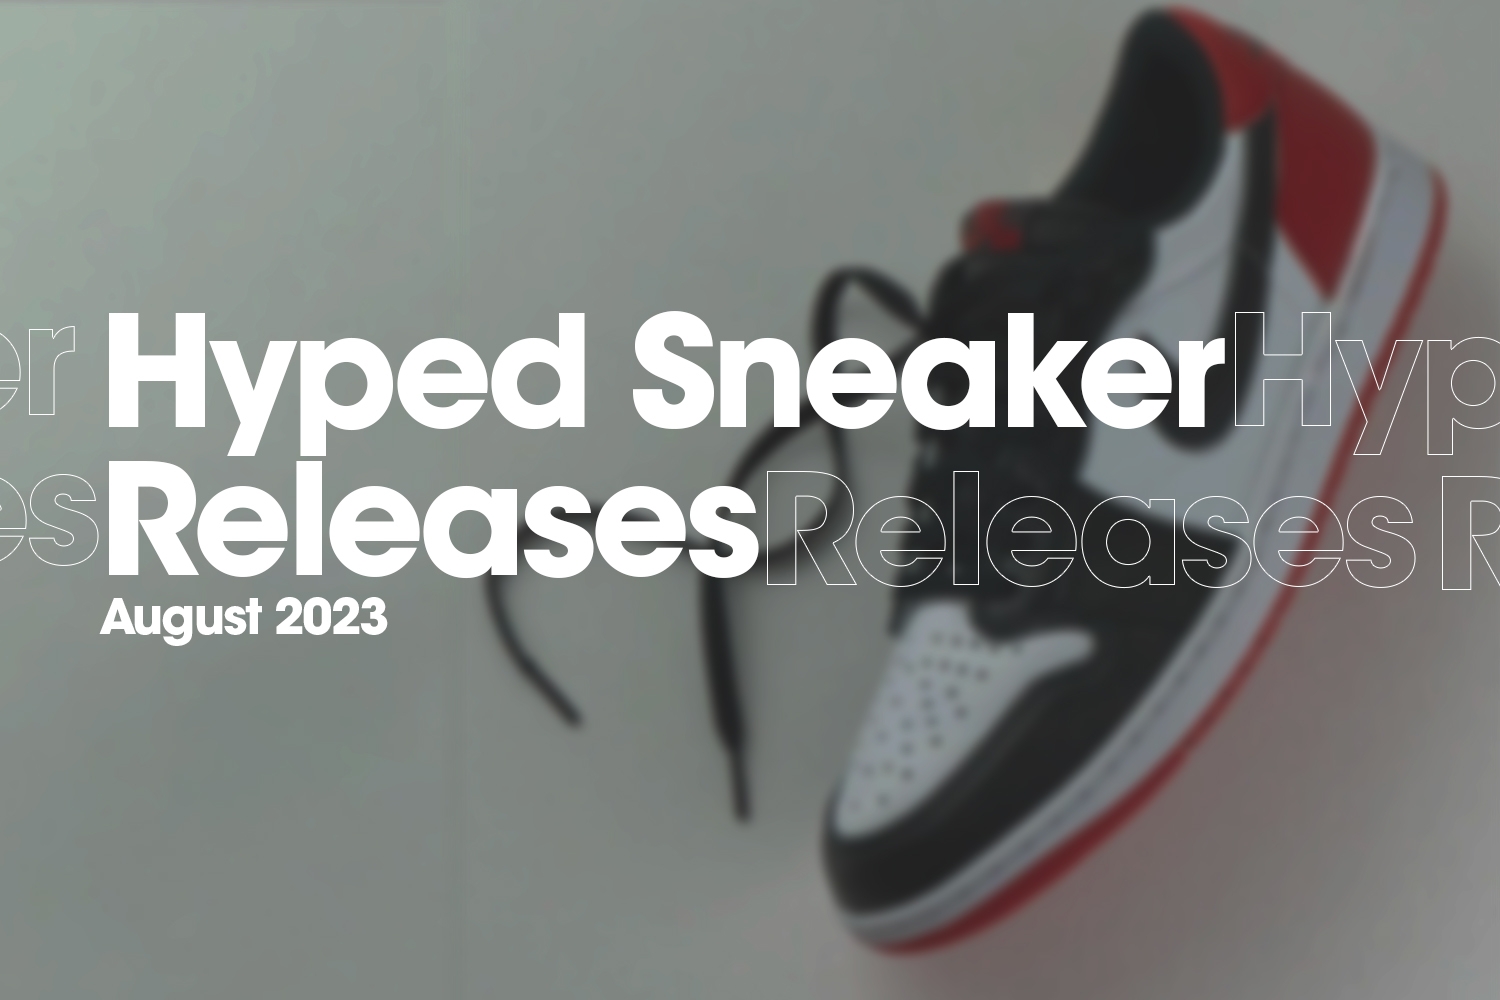 Die hyped Sneaker Releases von August 2023